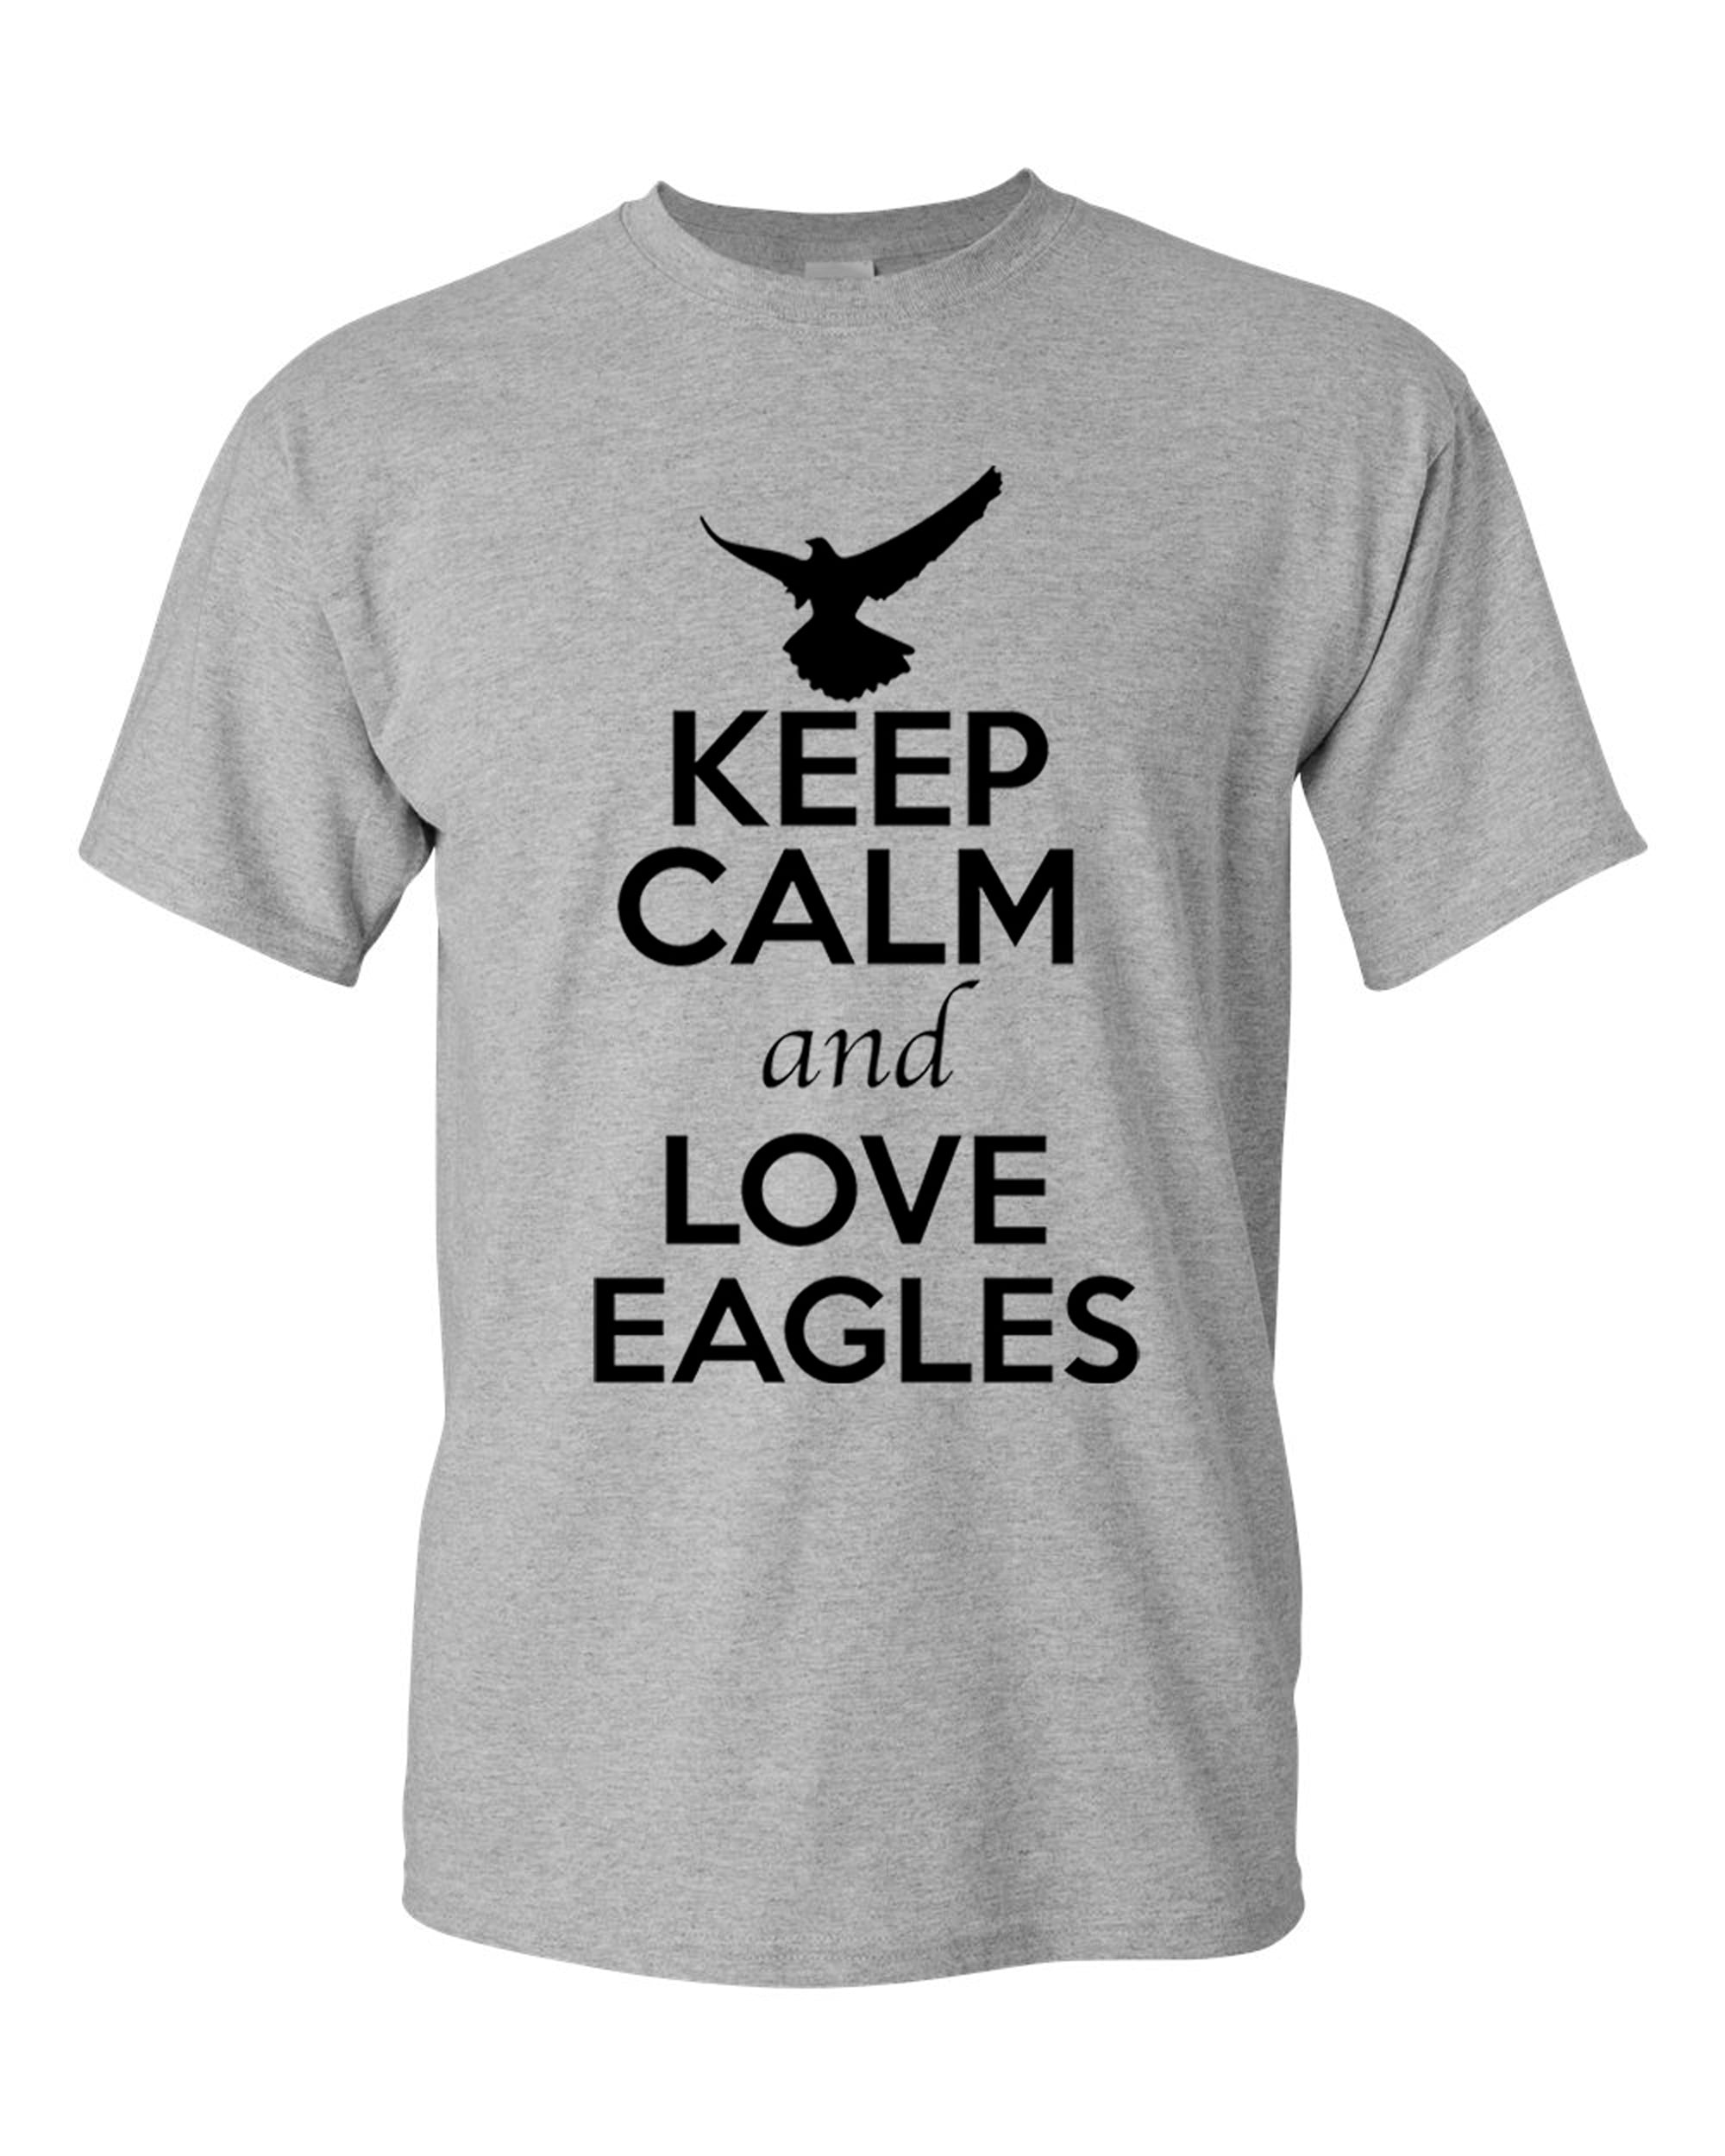 eagles shirts funny